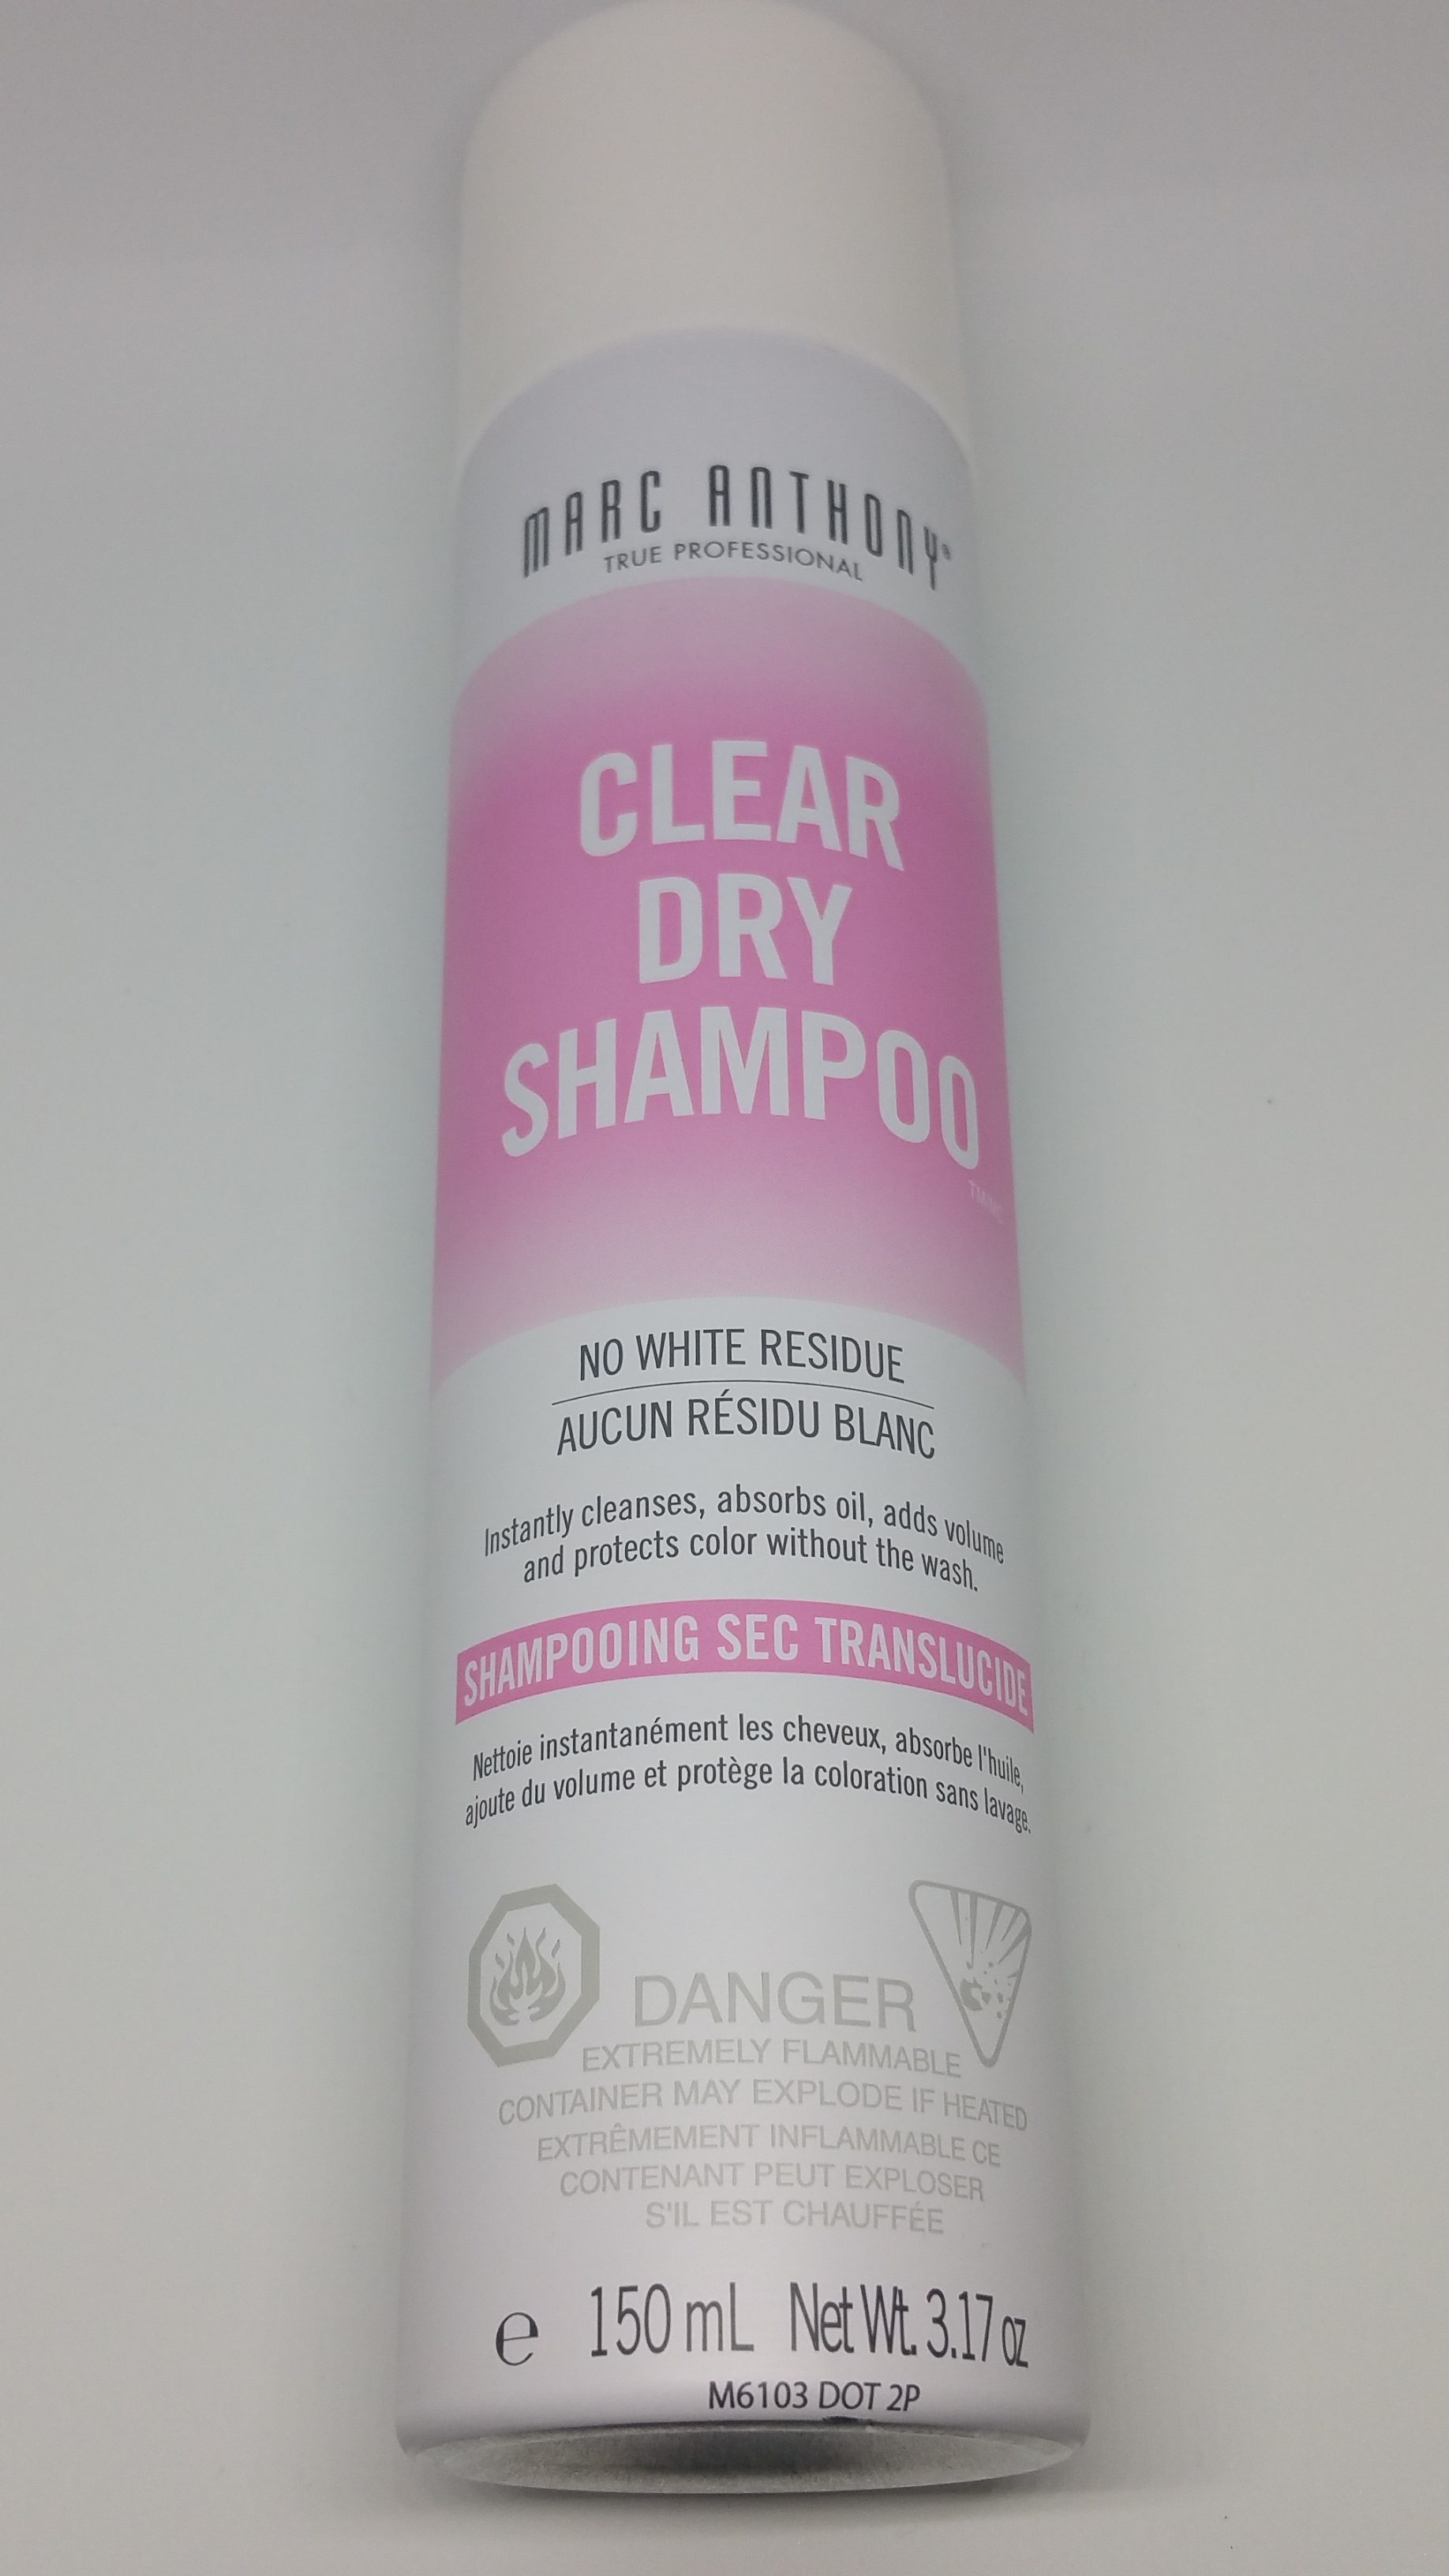 Dry Shampoo – The ladies secret weapon